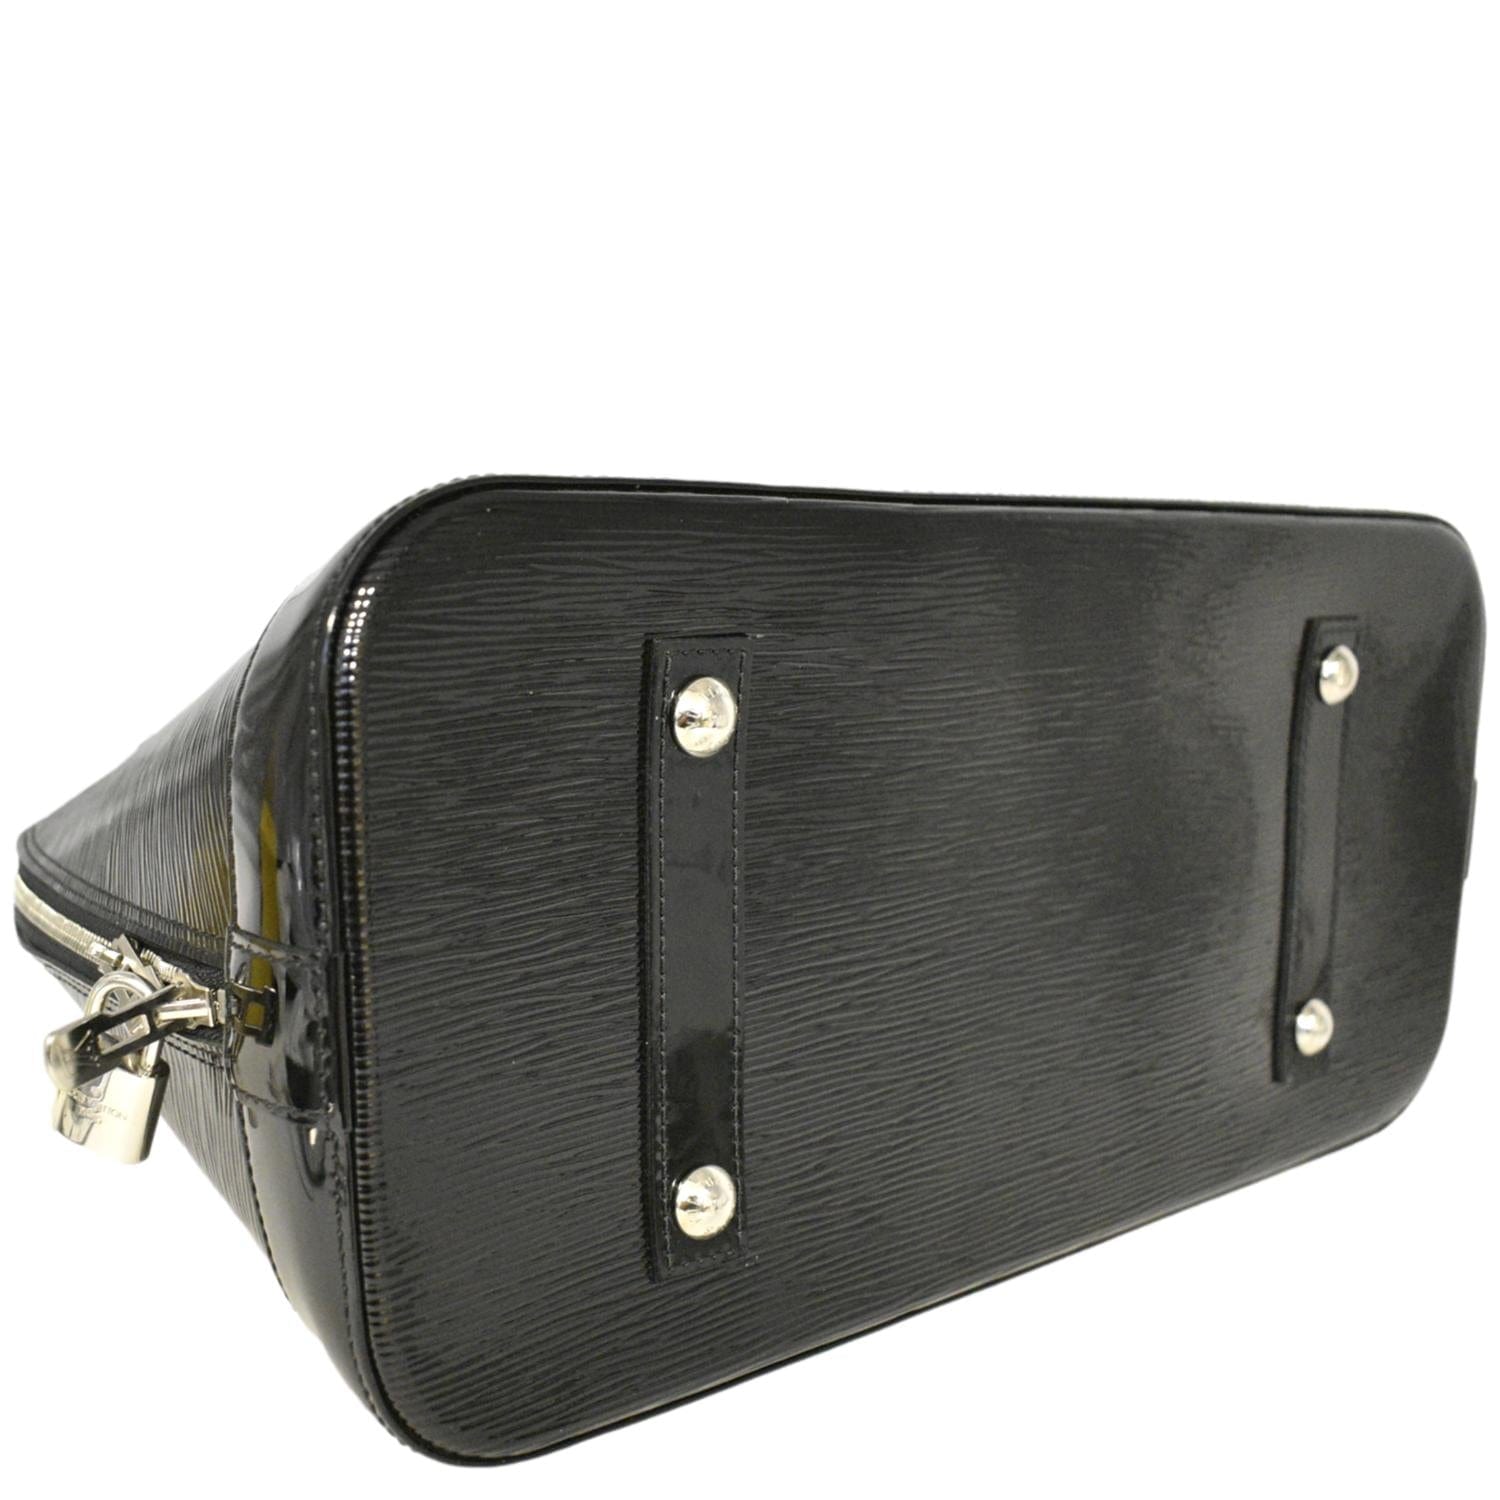 LOUIS VUITTON Electric Epi Leather Alma GM Satchel Bag